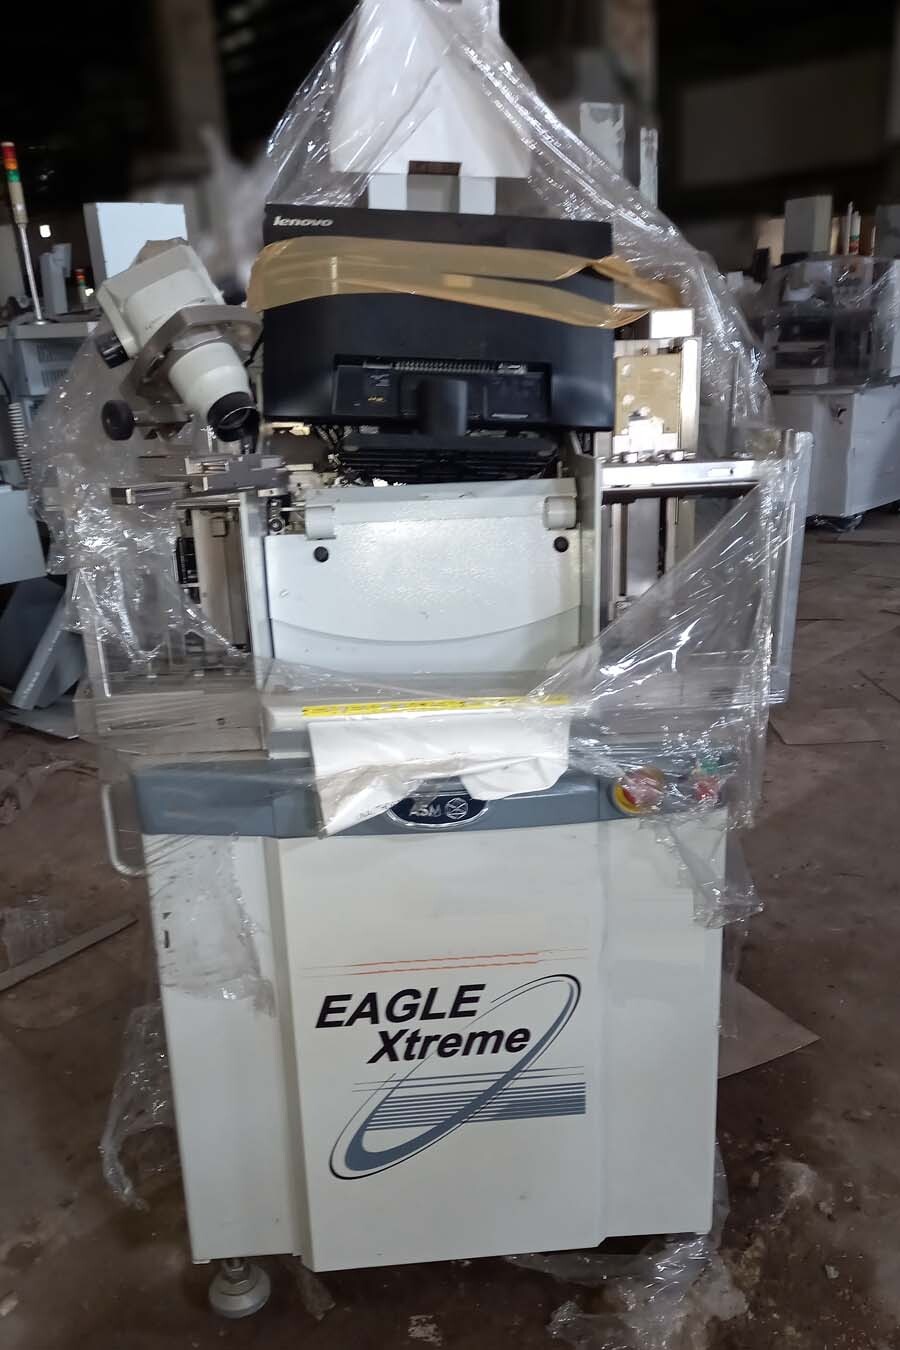 圖為 已使用的 ASM Eagle Xtreme 待售